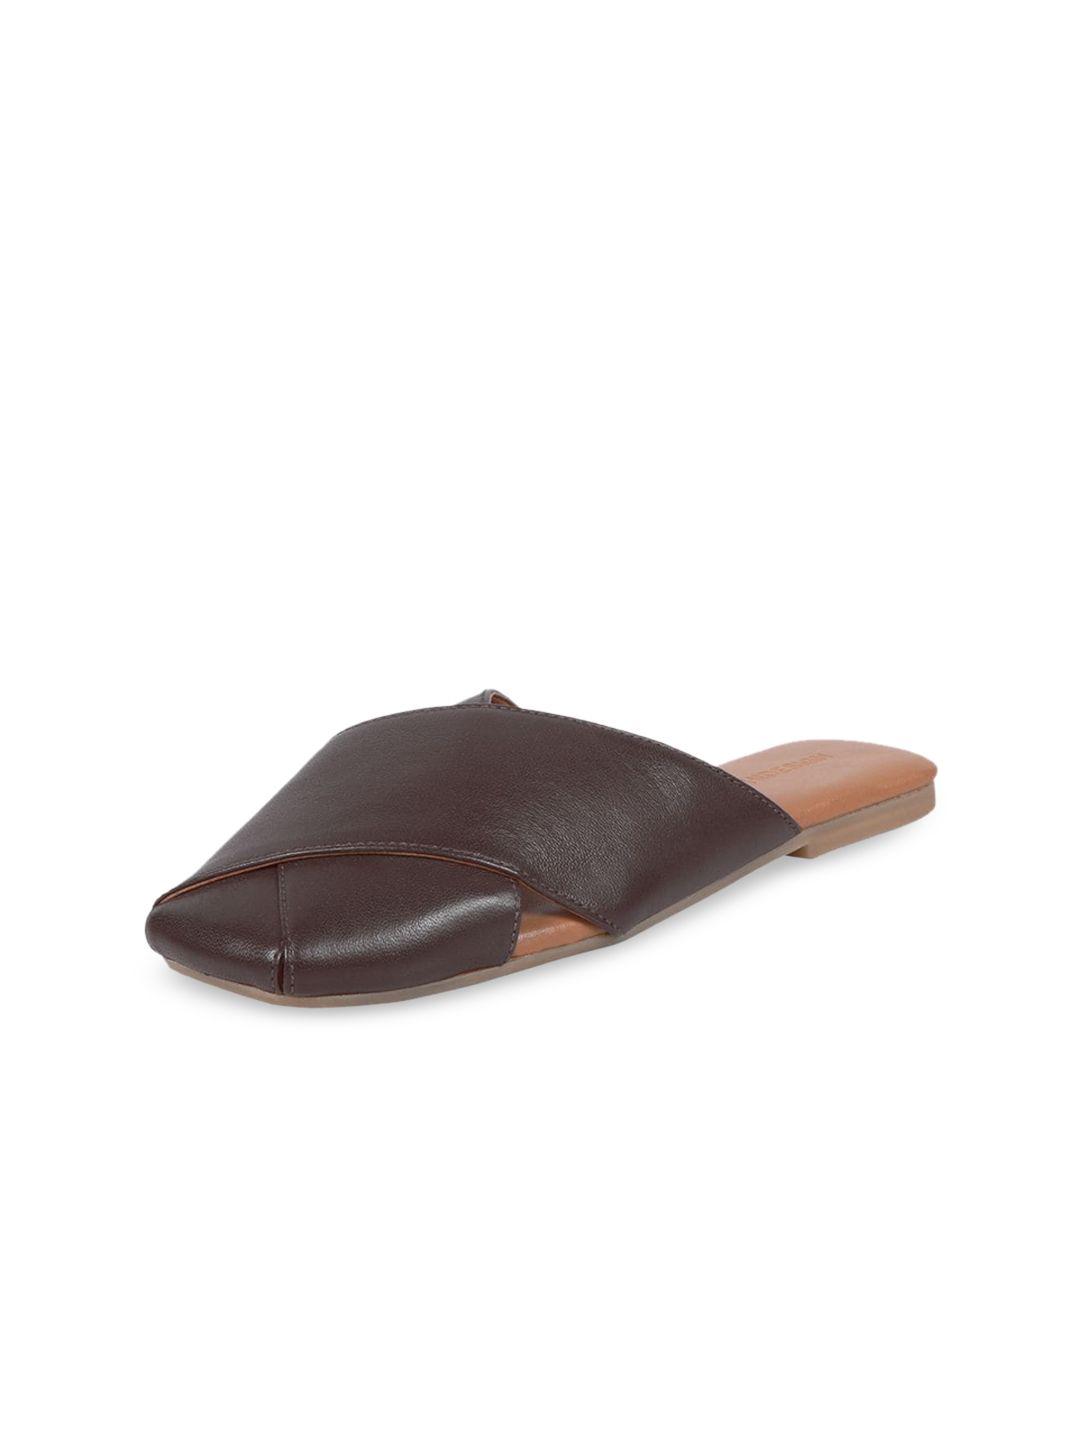 hidesign nara round toe leather mules